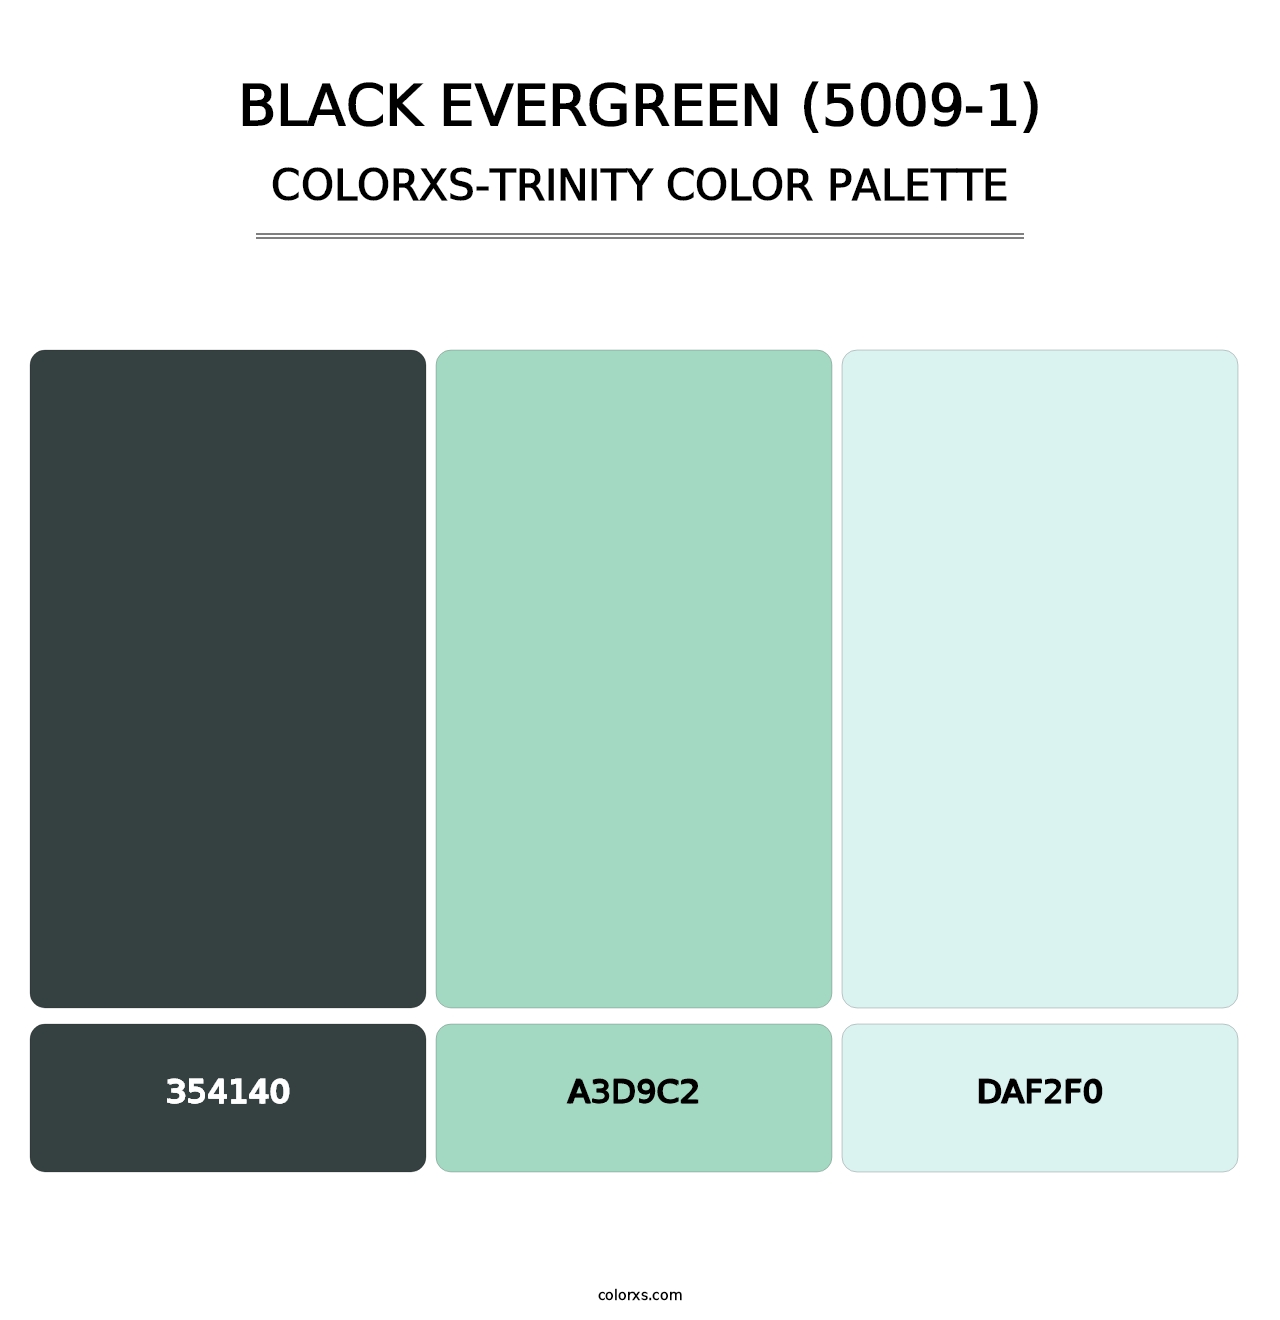 Black Evergreen (5009-1) - Colorxs Trinity Palette